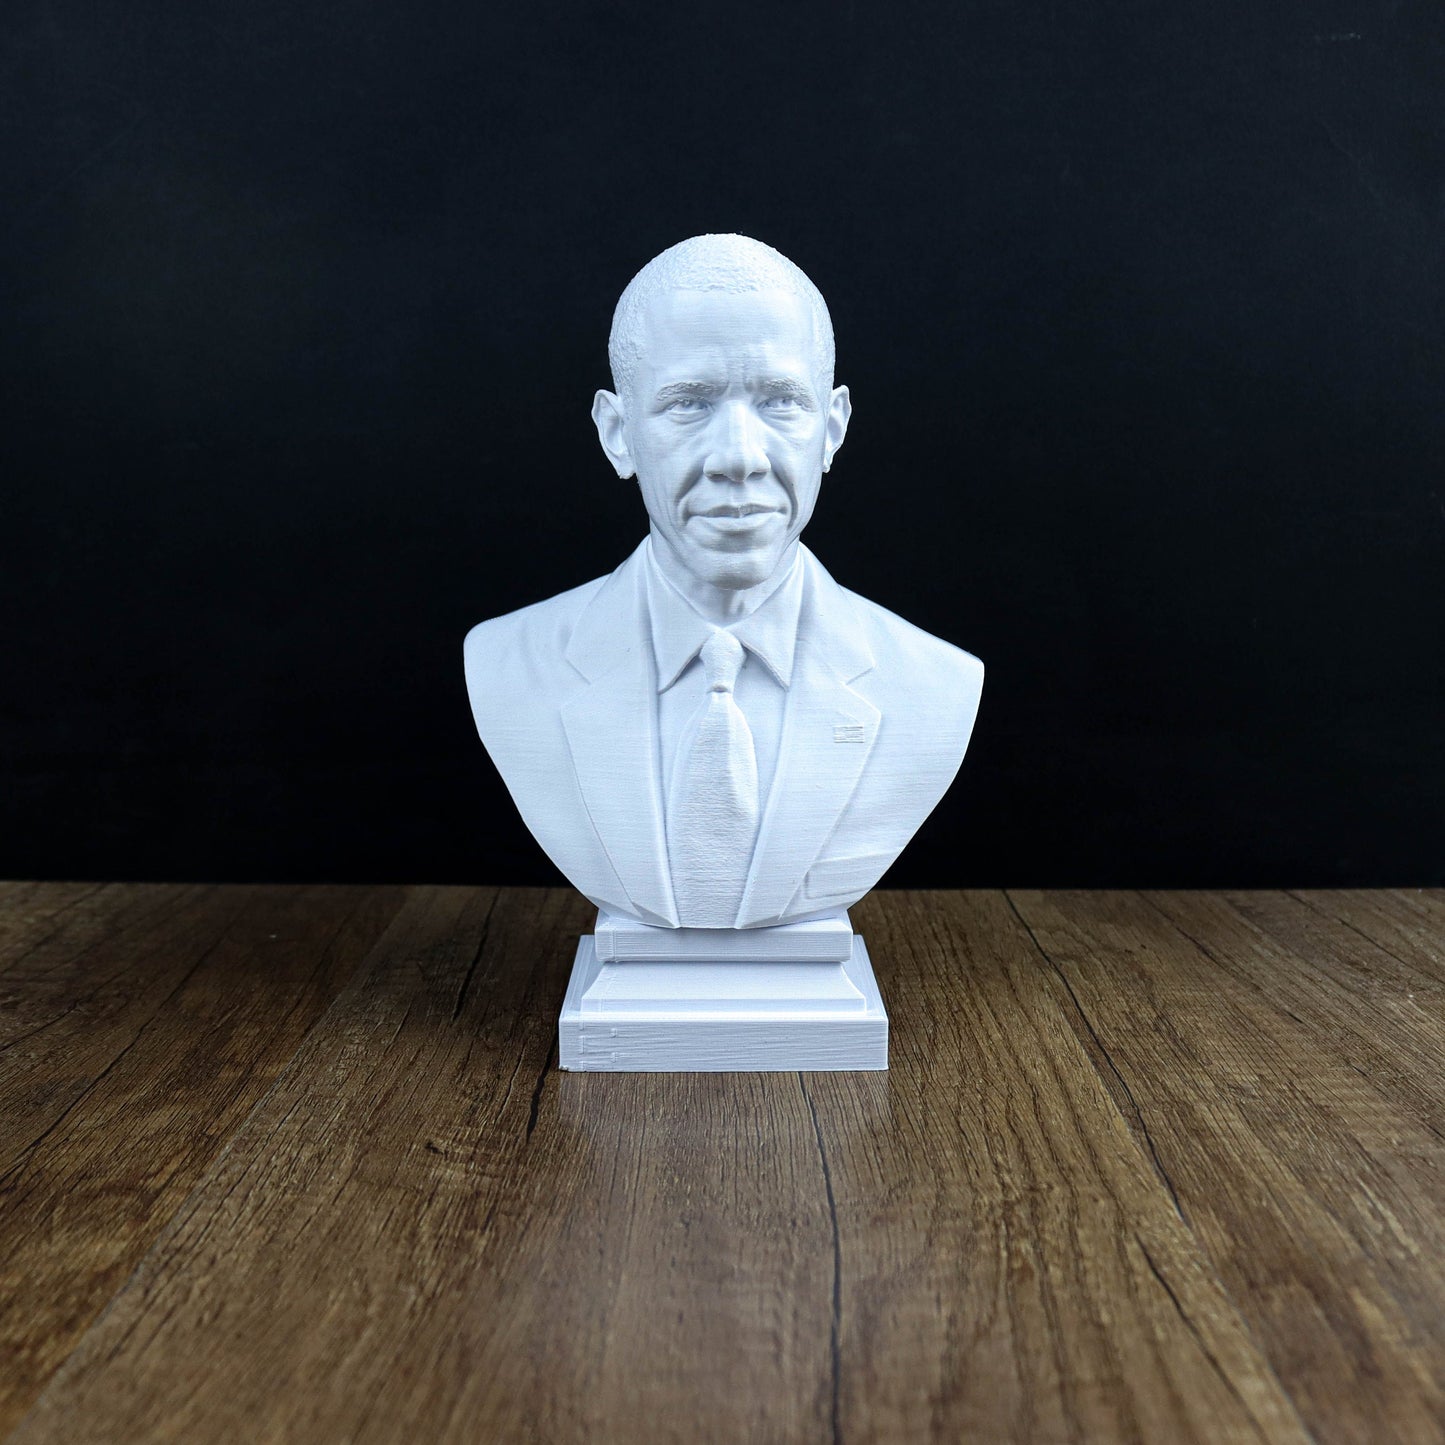 Barrack Obama Bust, 44th American President Sculpture